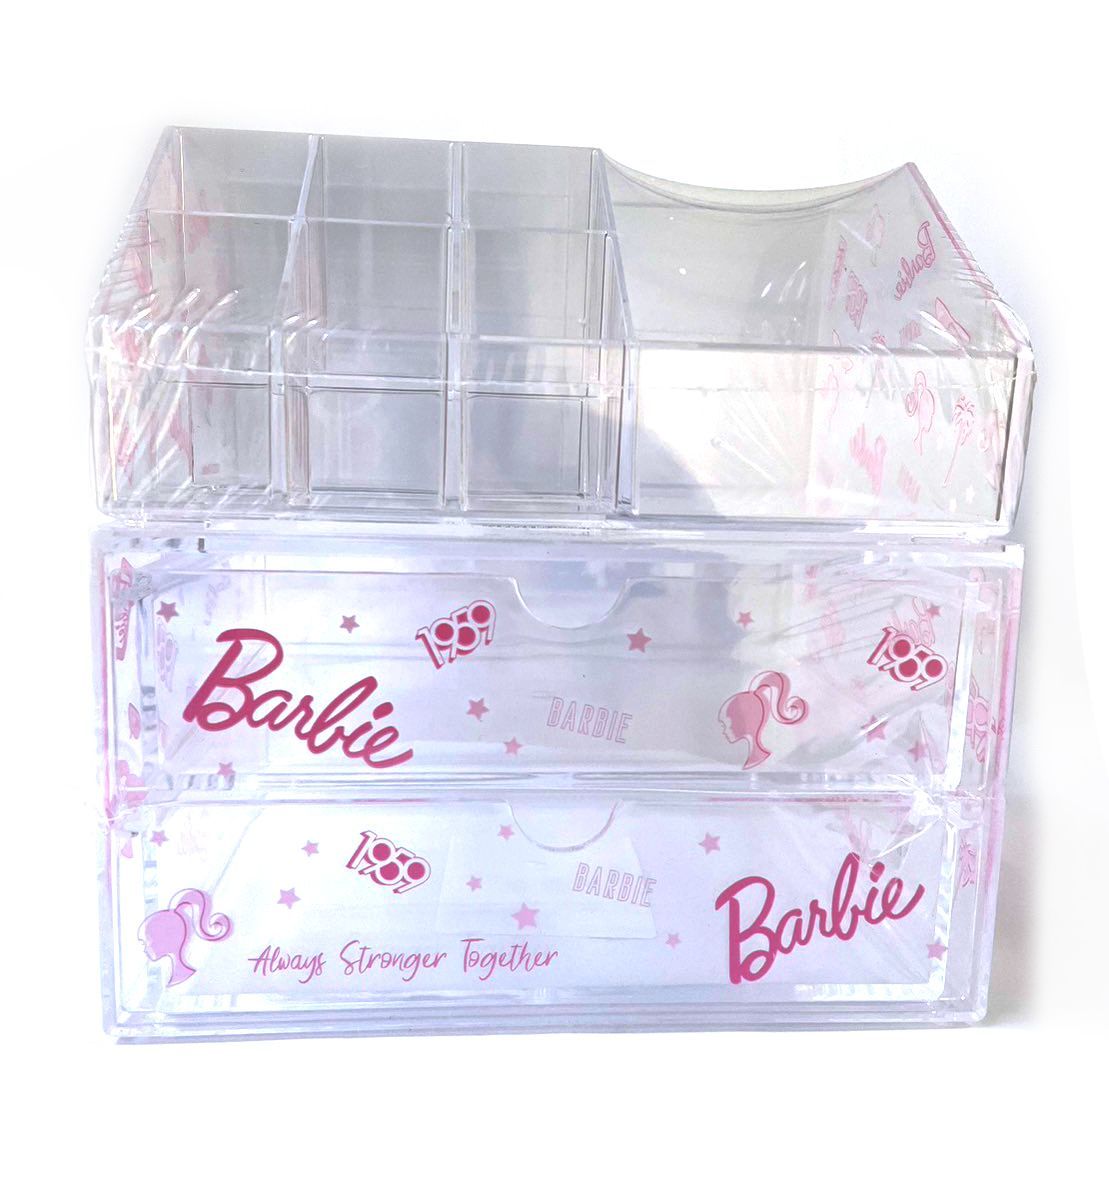 Barbie バービー メイクボックス コスメ収納 日本未入荷 希少 輸入品